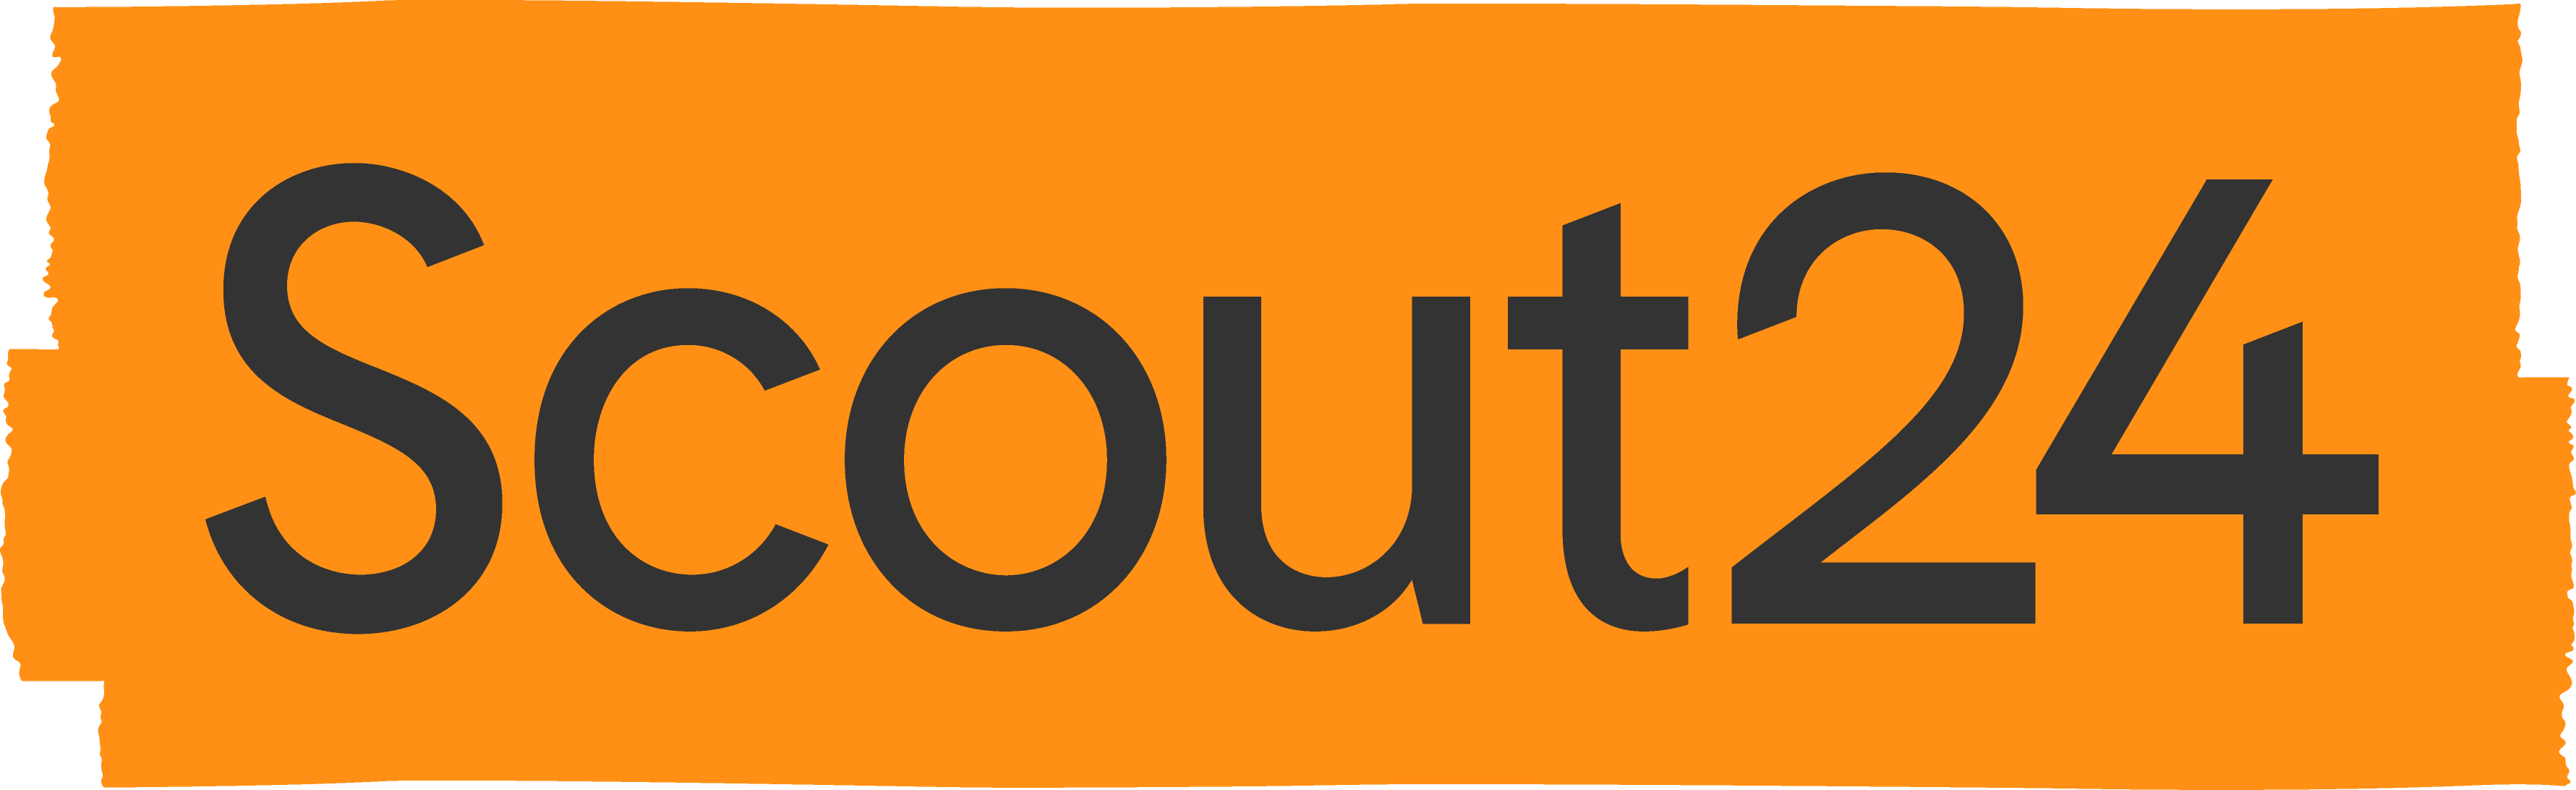 Logo Scout24-image